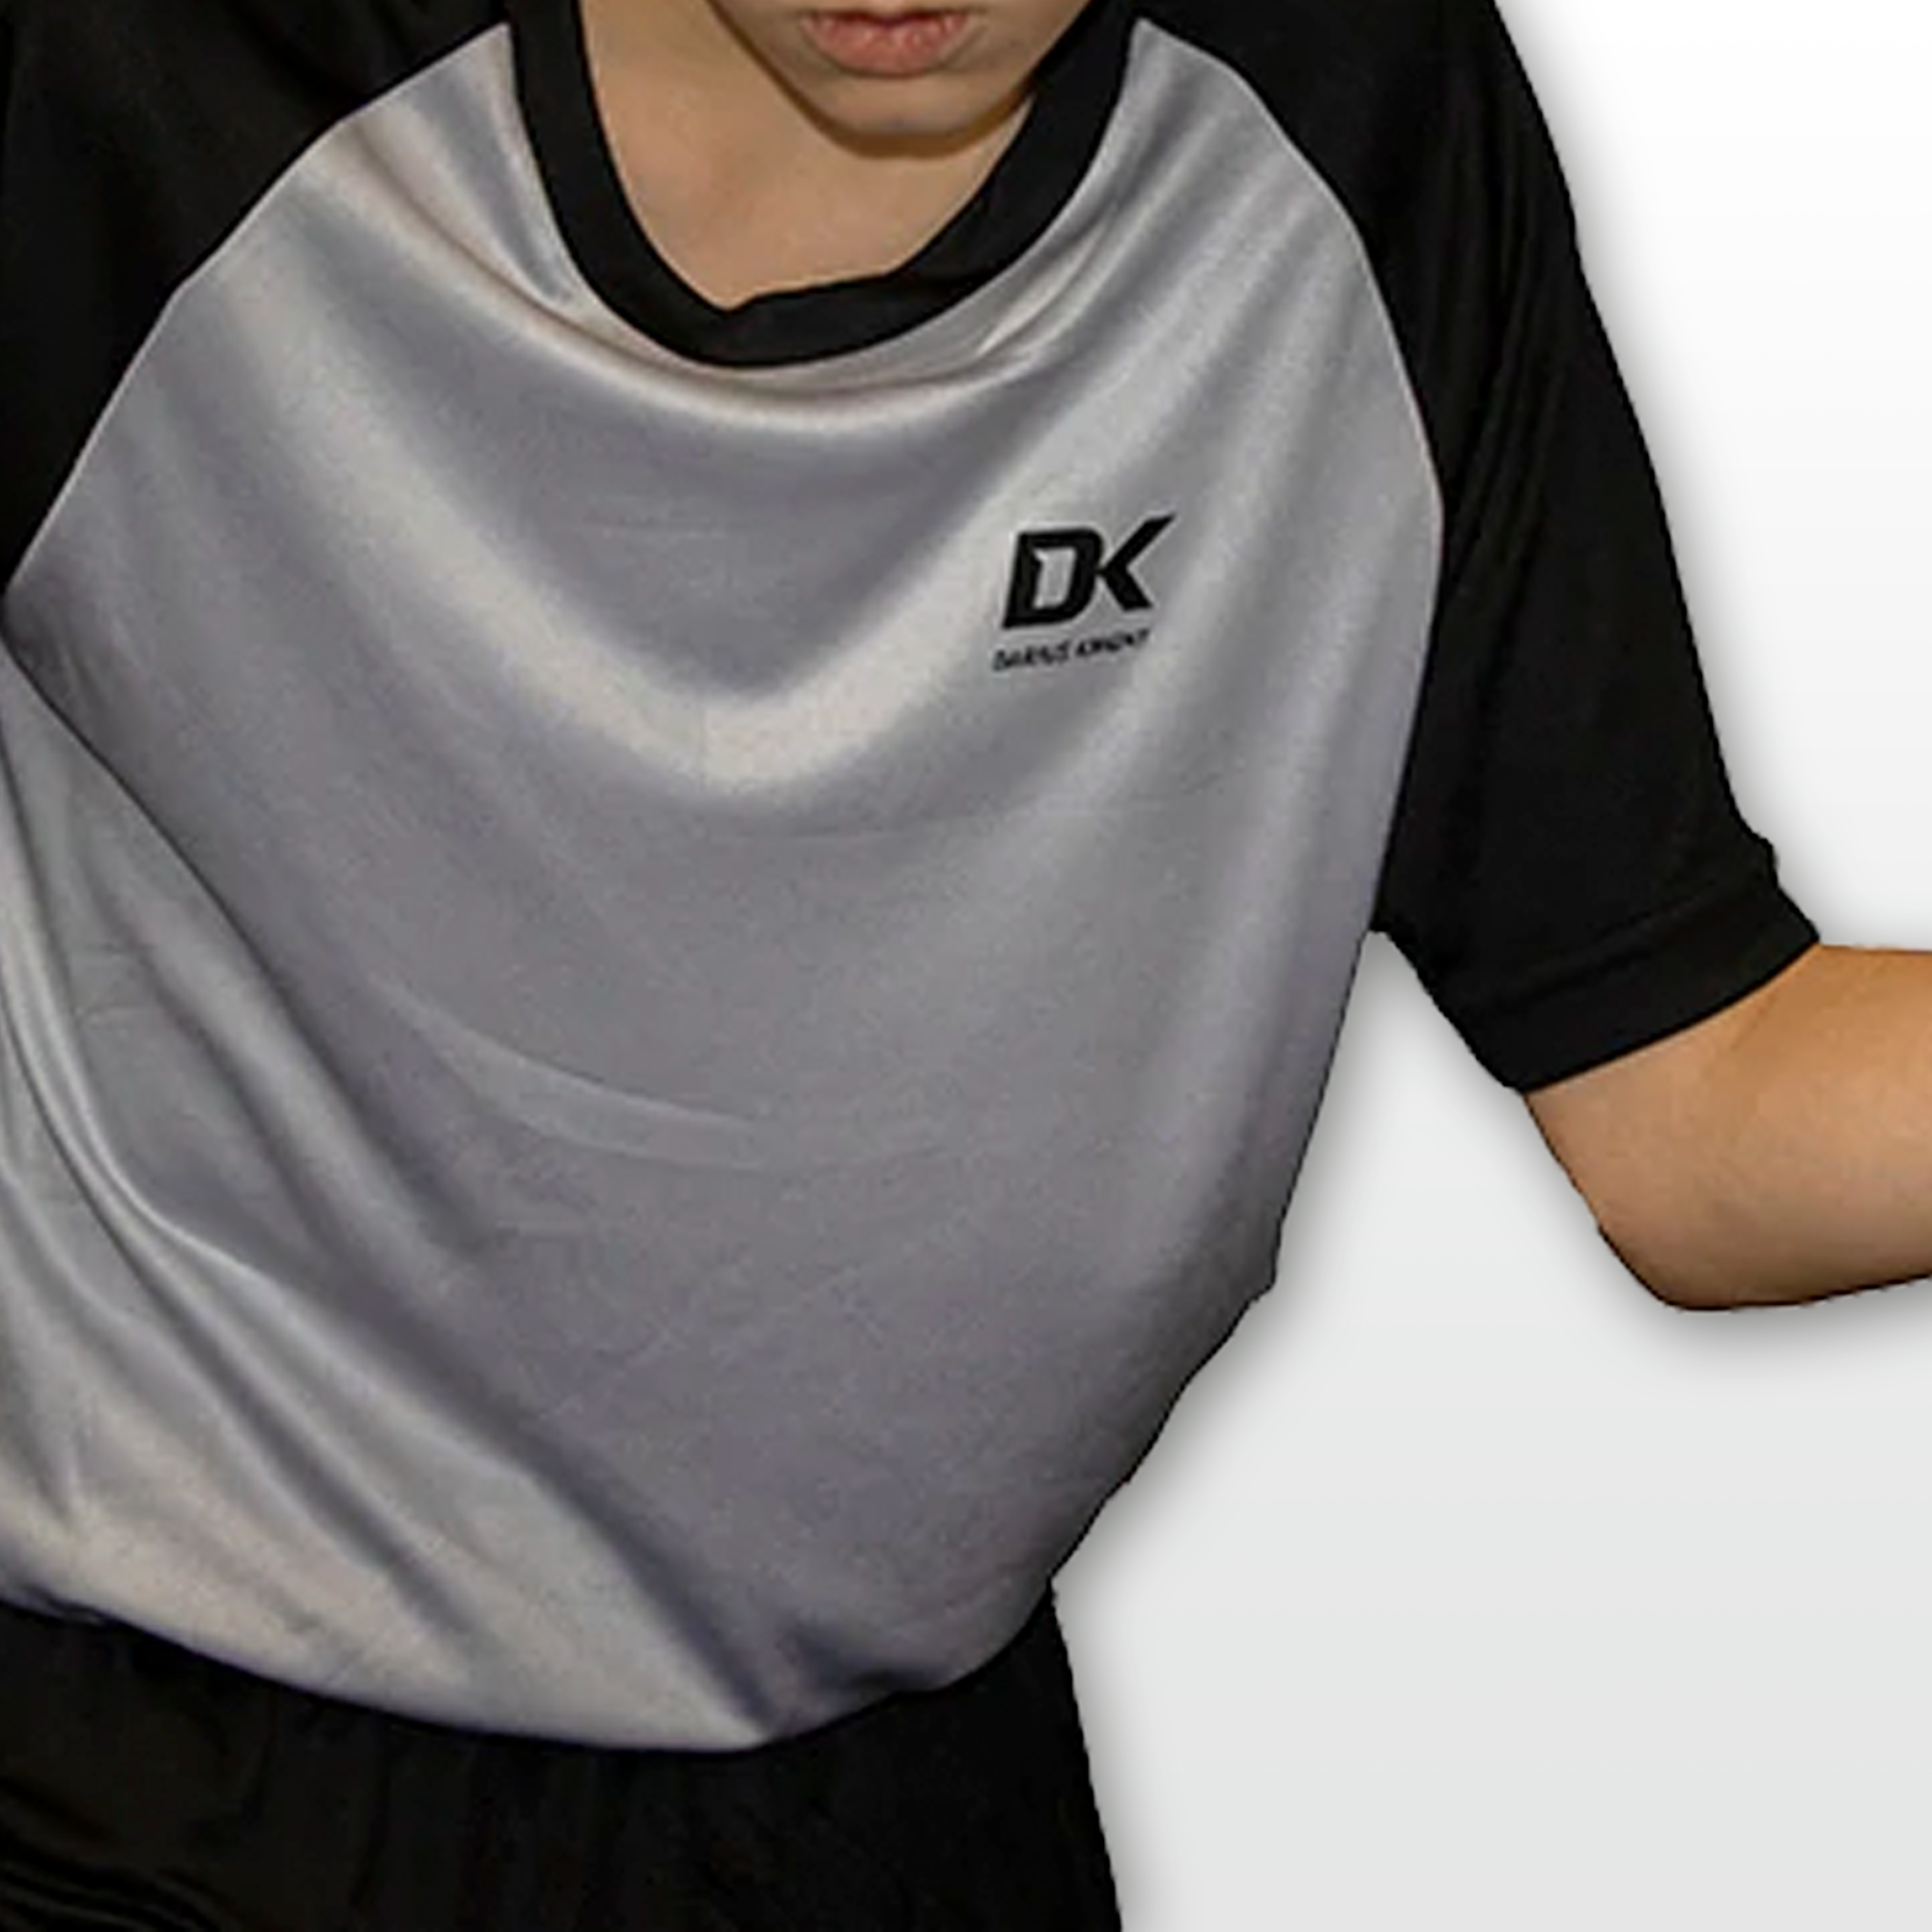 DK Basic Training Shirt (Light Grey/Black) - DK Sports